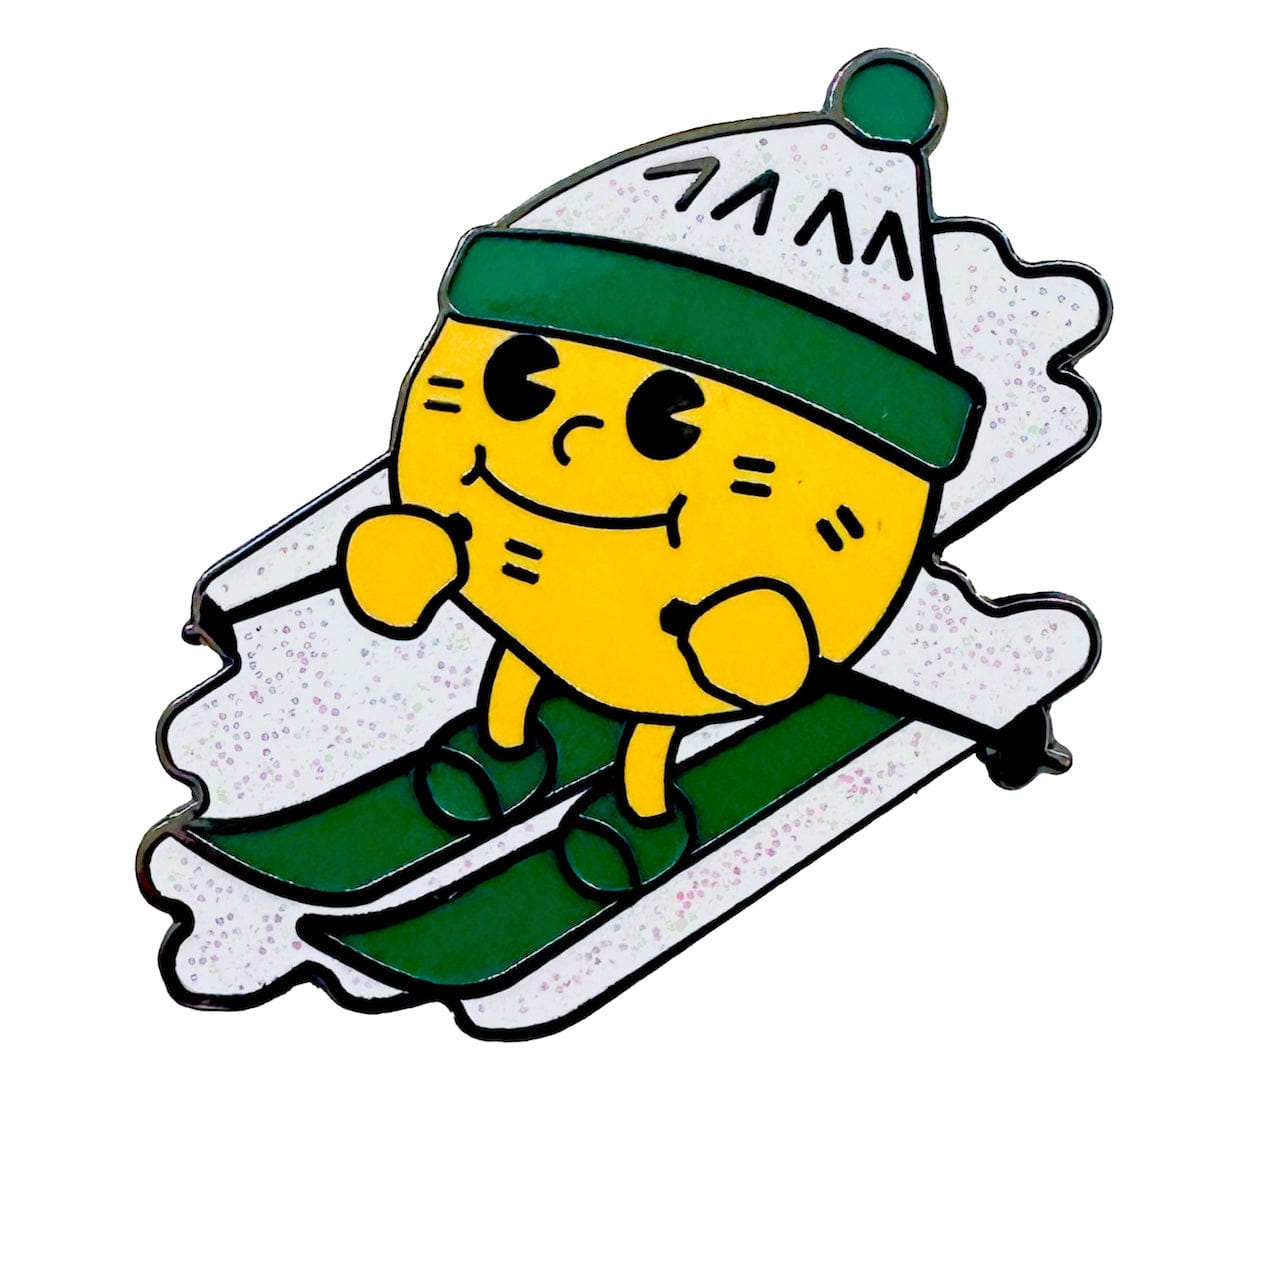 Pinbuds Enamel pin Skiing potato pin - Kutchan from Shiribeshi prefecture (Japan Mascot collection)